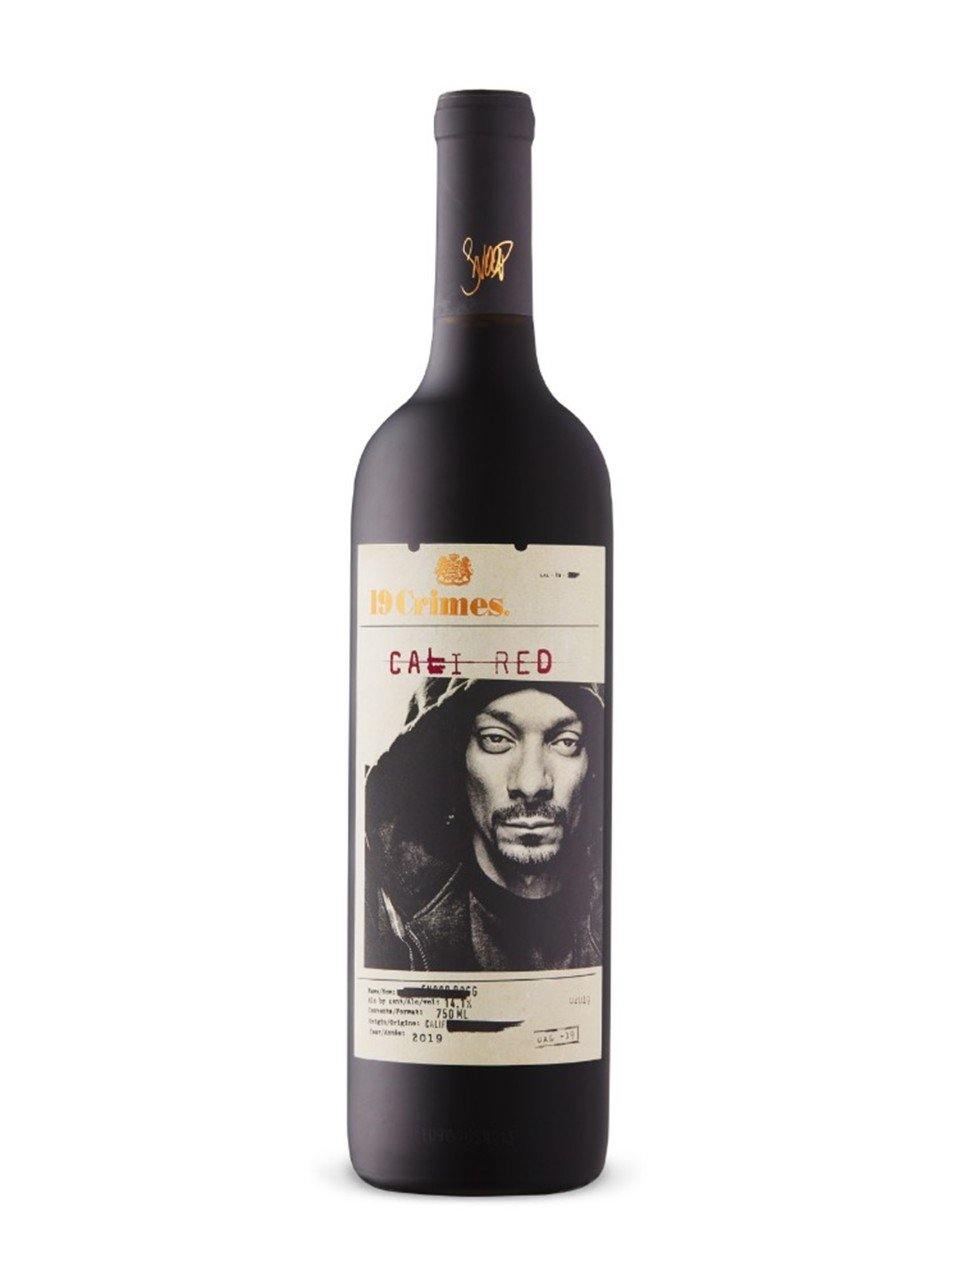 19 Crimes Snoop Dogg Cali Red Red Blend  750 mL bottle - Speedy Booze